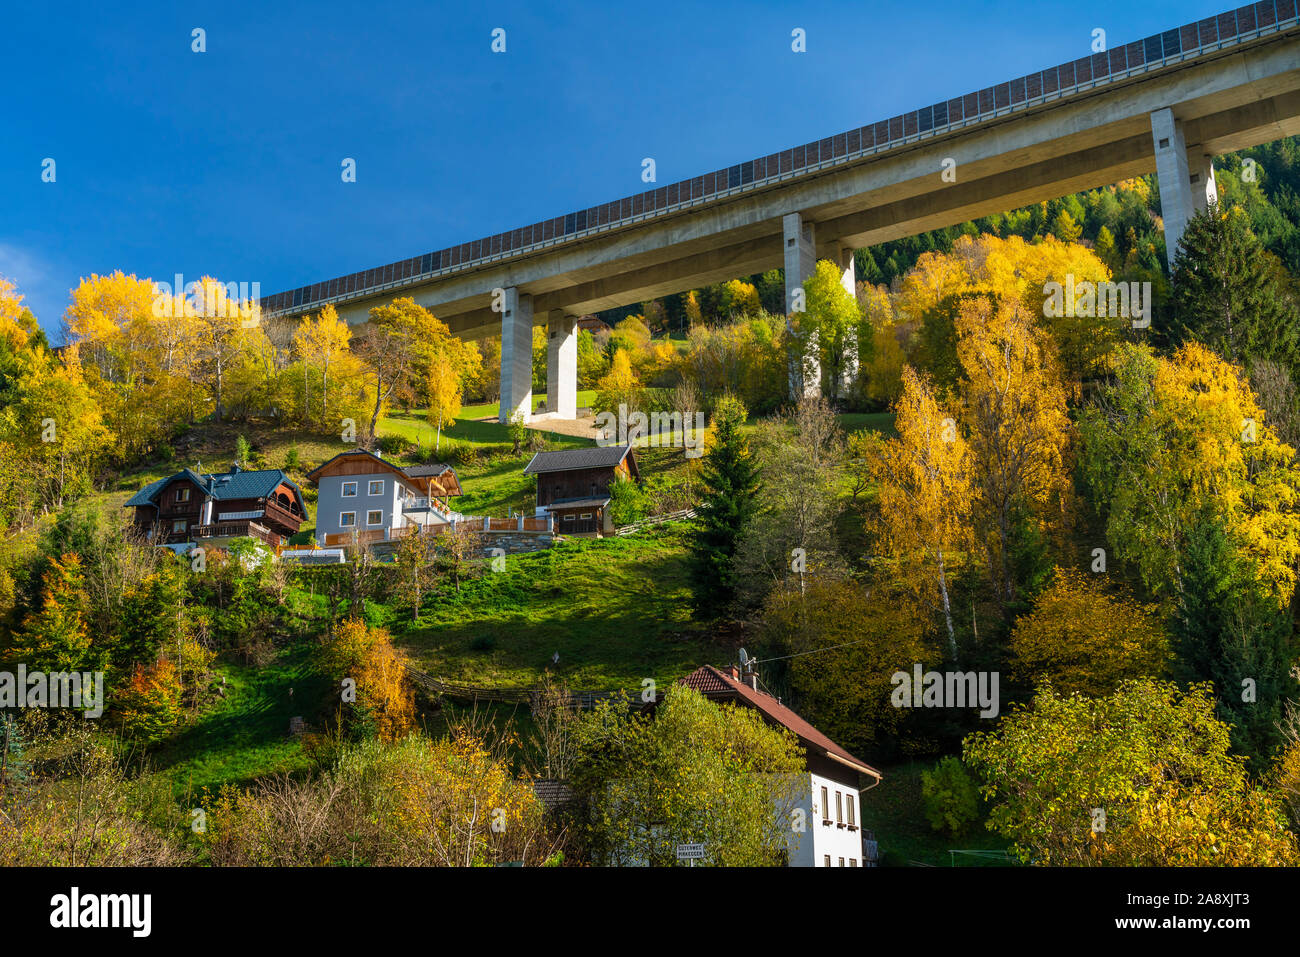 The raised Autobahn freeway over the village of Spittal, Austria, Europe. Stock Photo